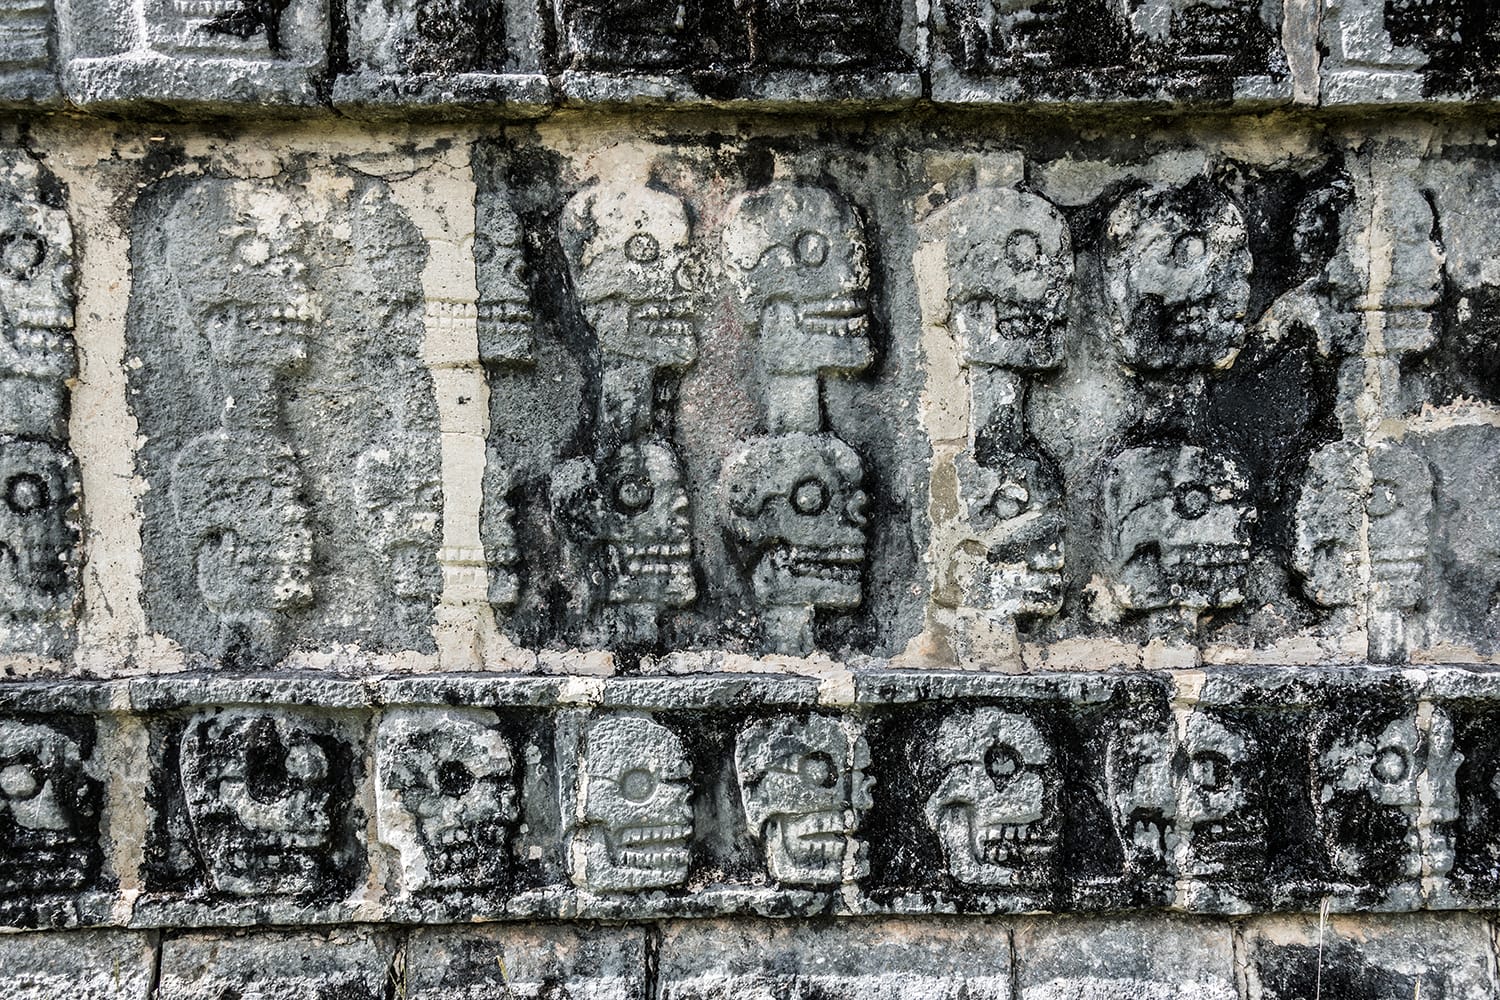 Skull Platform at Chichen Itza in Mexico